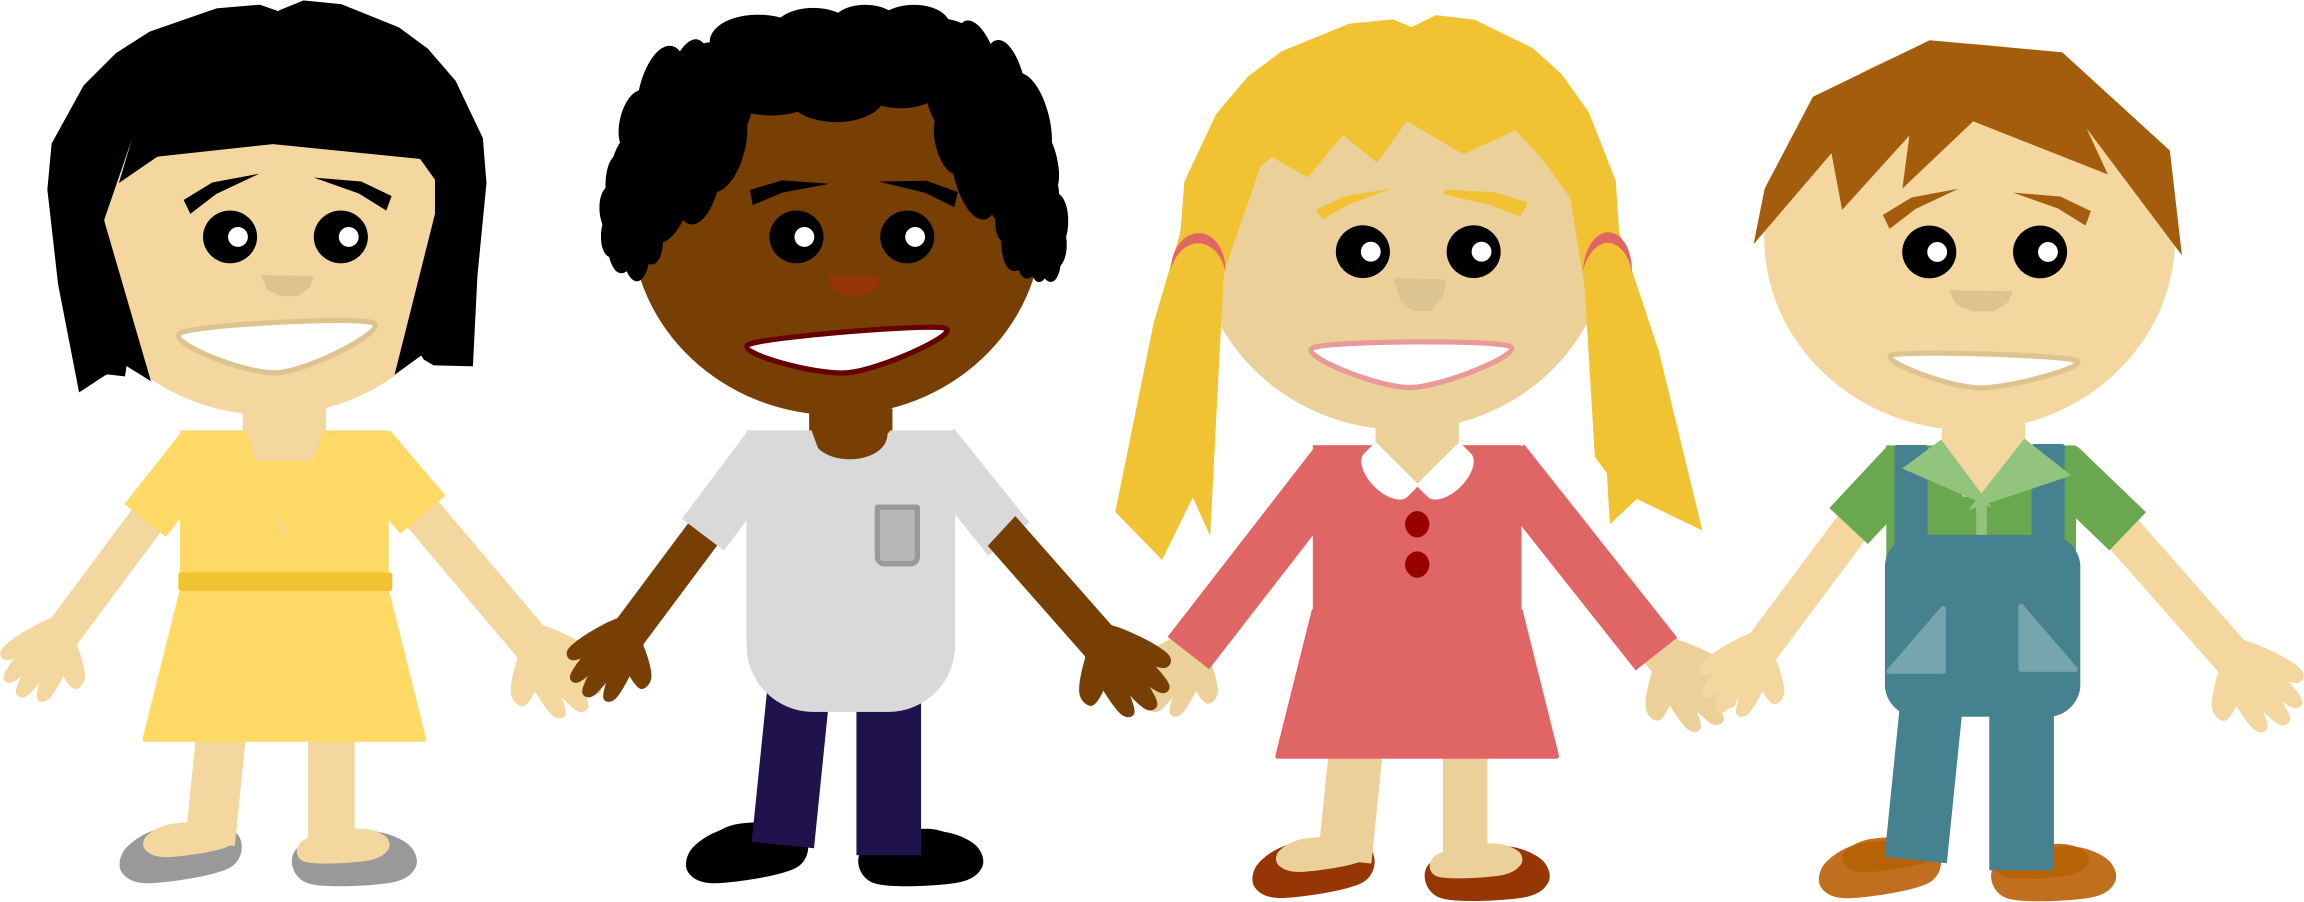 Clipart - Children holding hands